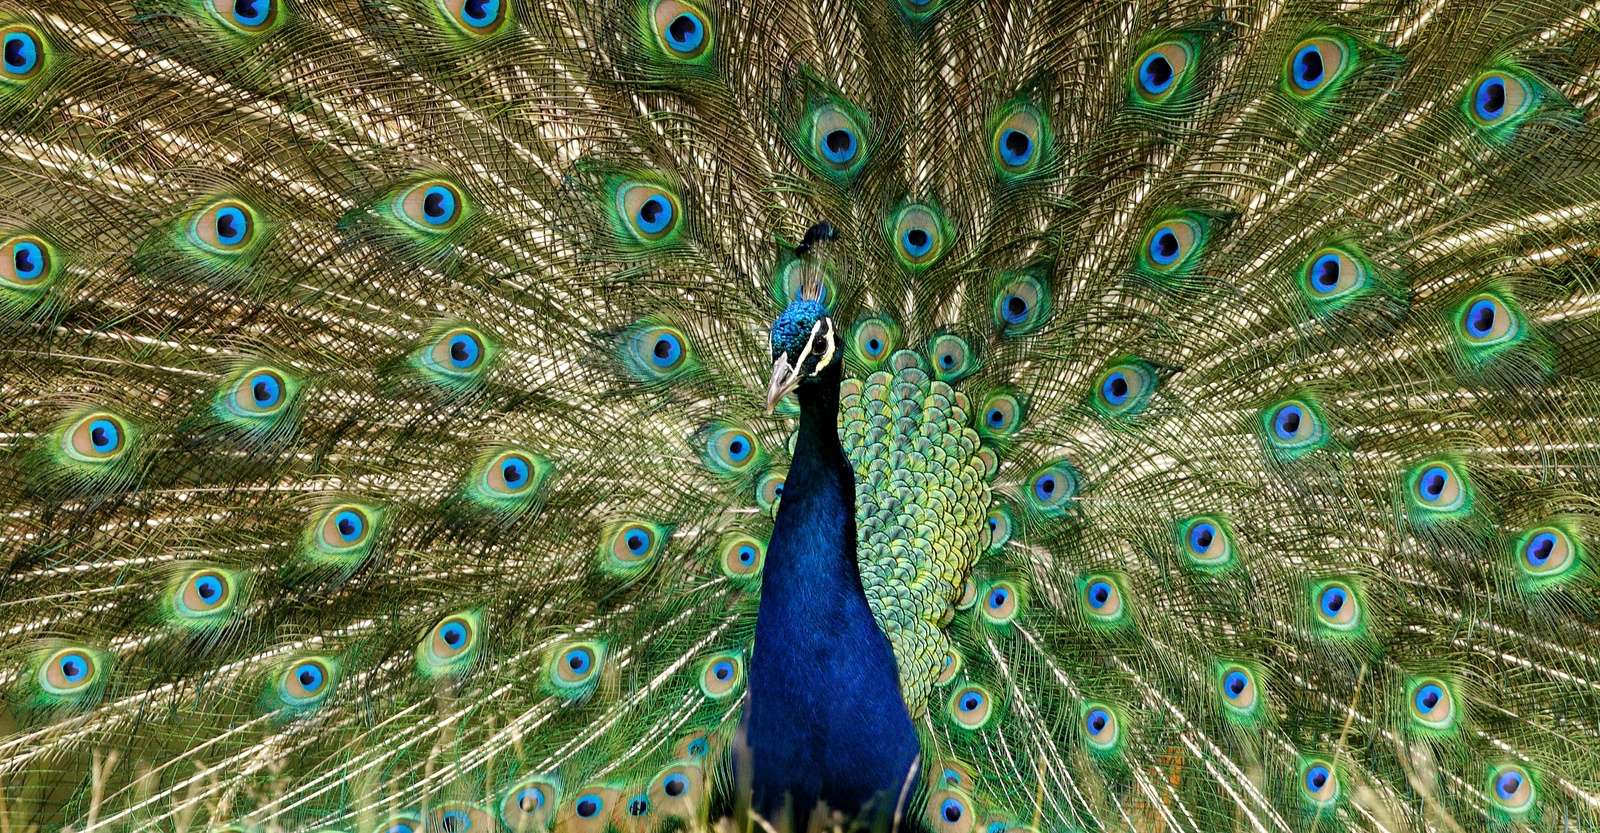 Peacock, Ranthambore National Park, India.